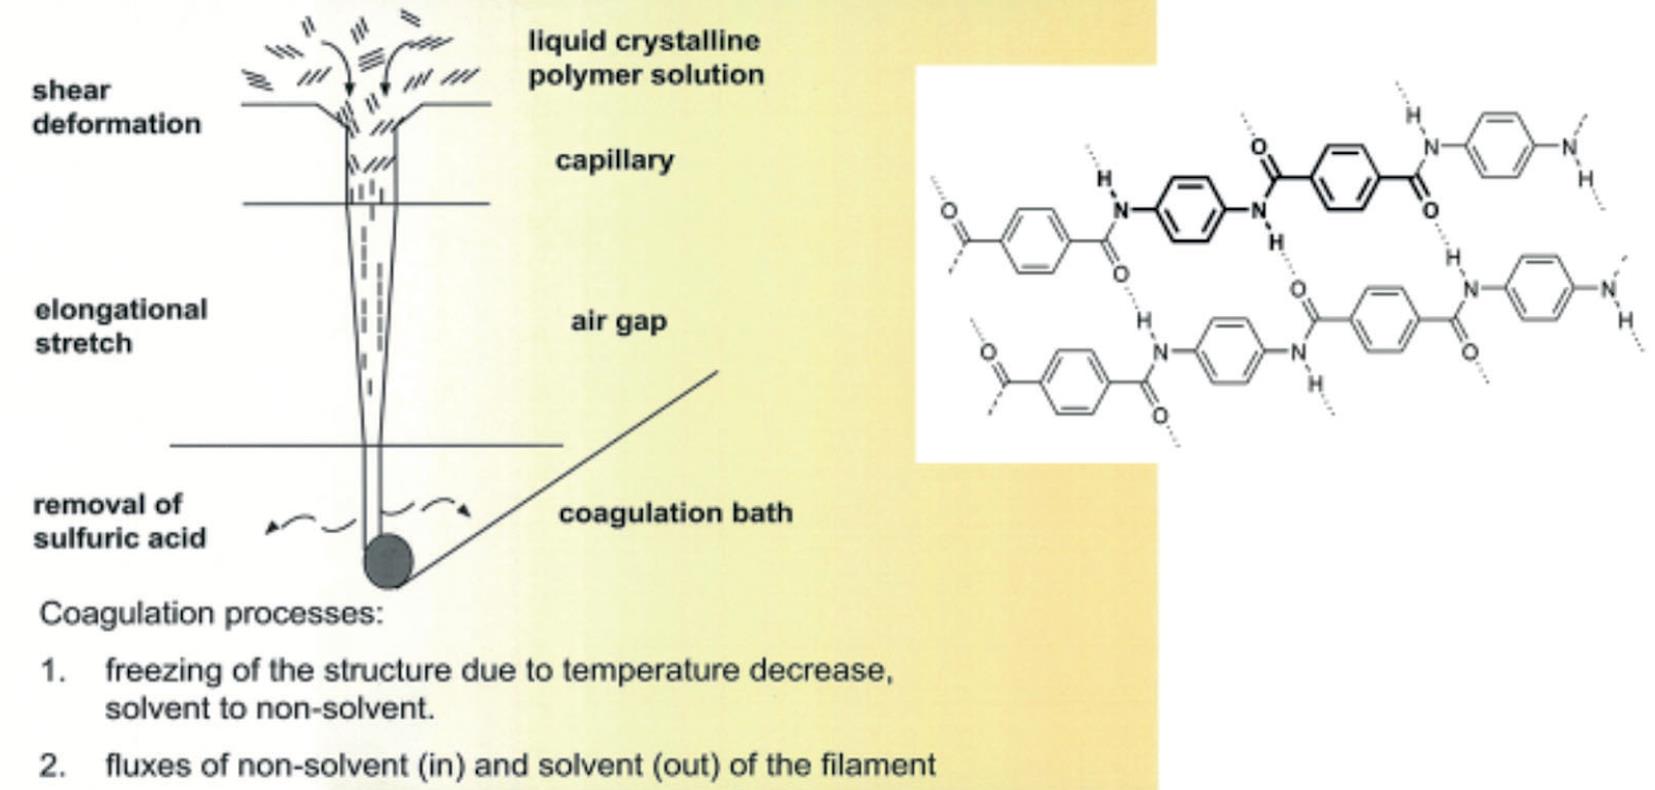 polyethylene vs paraaramide - technology comparison - 1